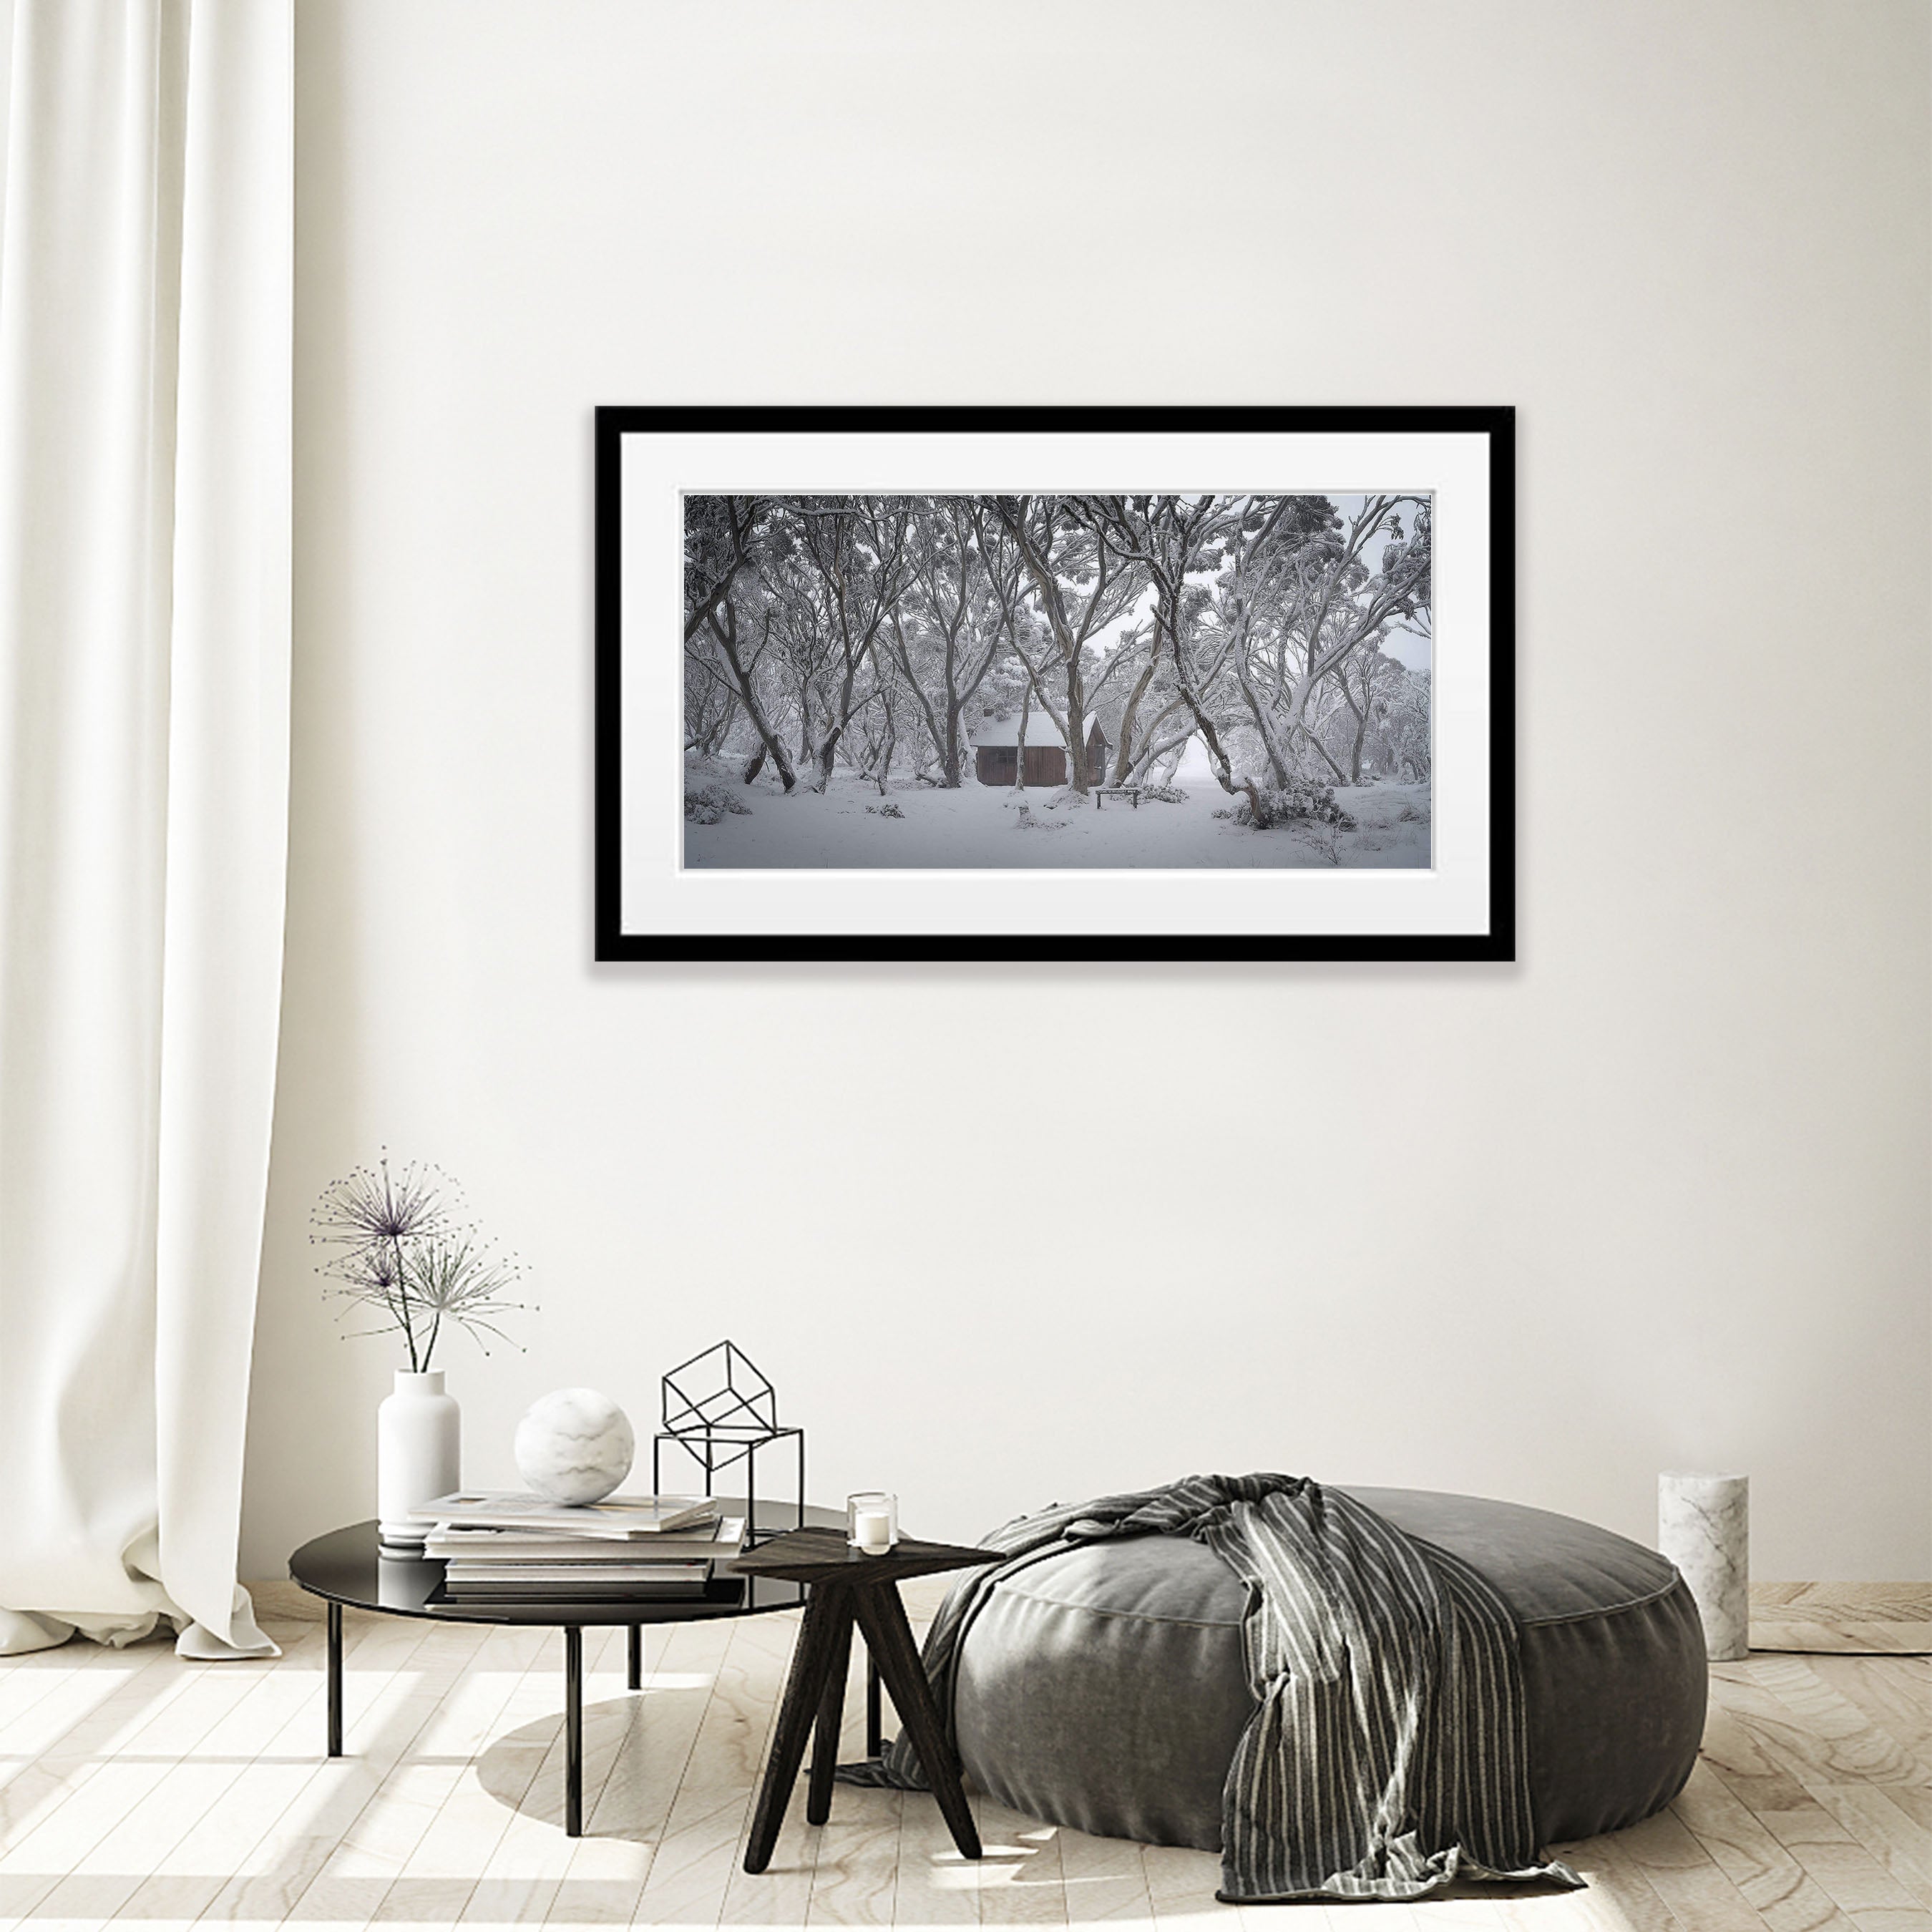 ARTWORK INSTOCK - JB Hut, Dinner Plain, Victorian High Country - 150 x 75cms Canvas Raw Oak Print